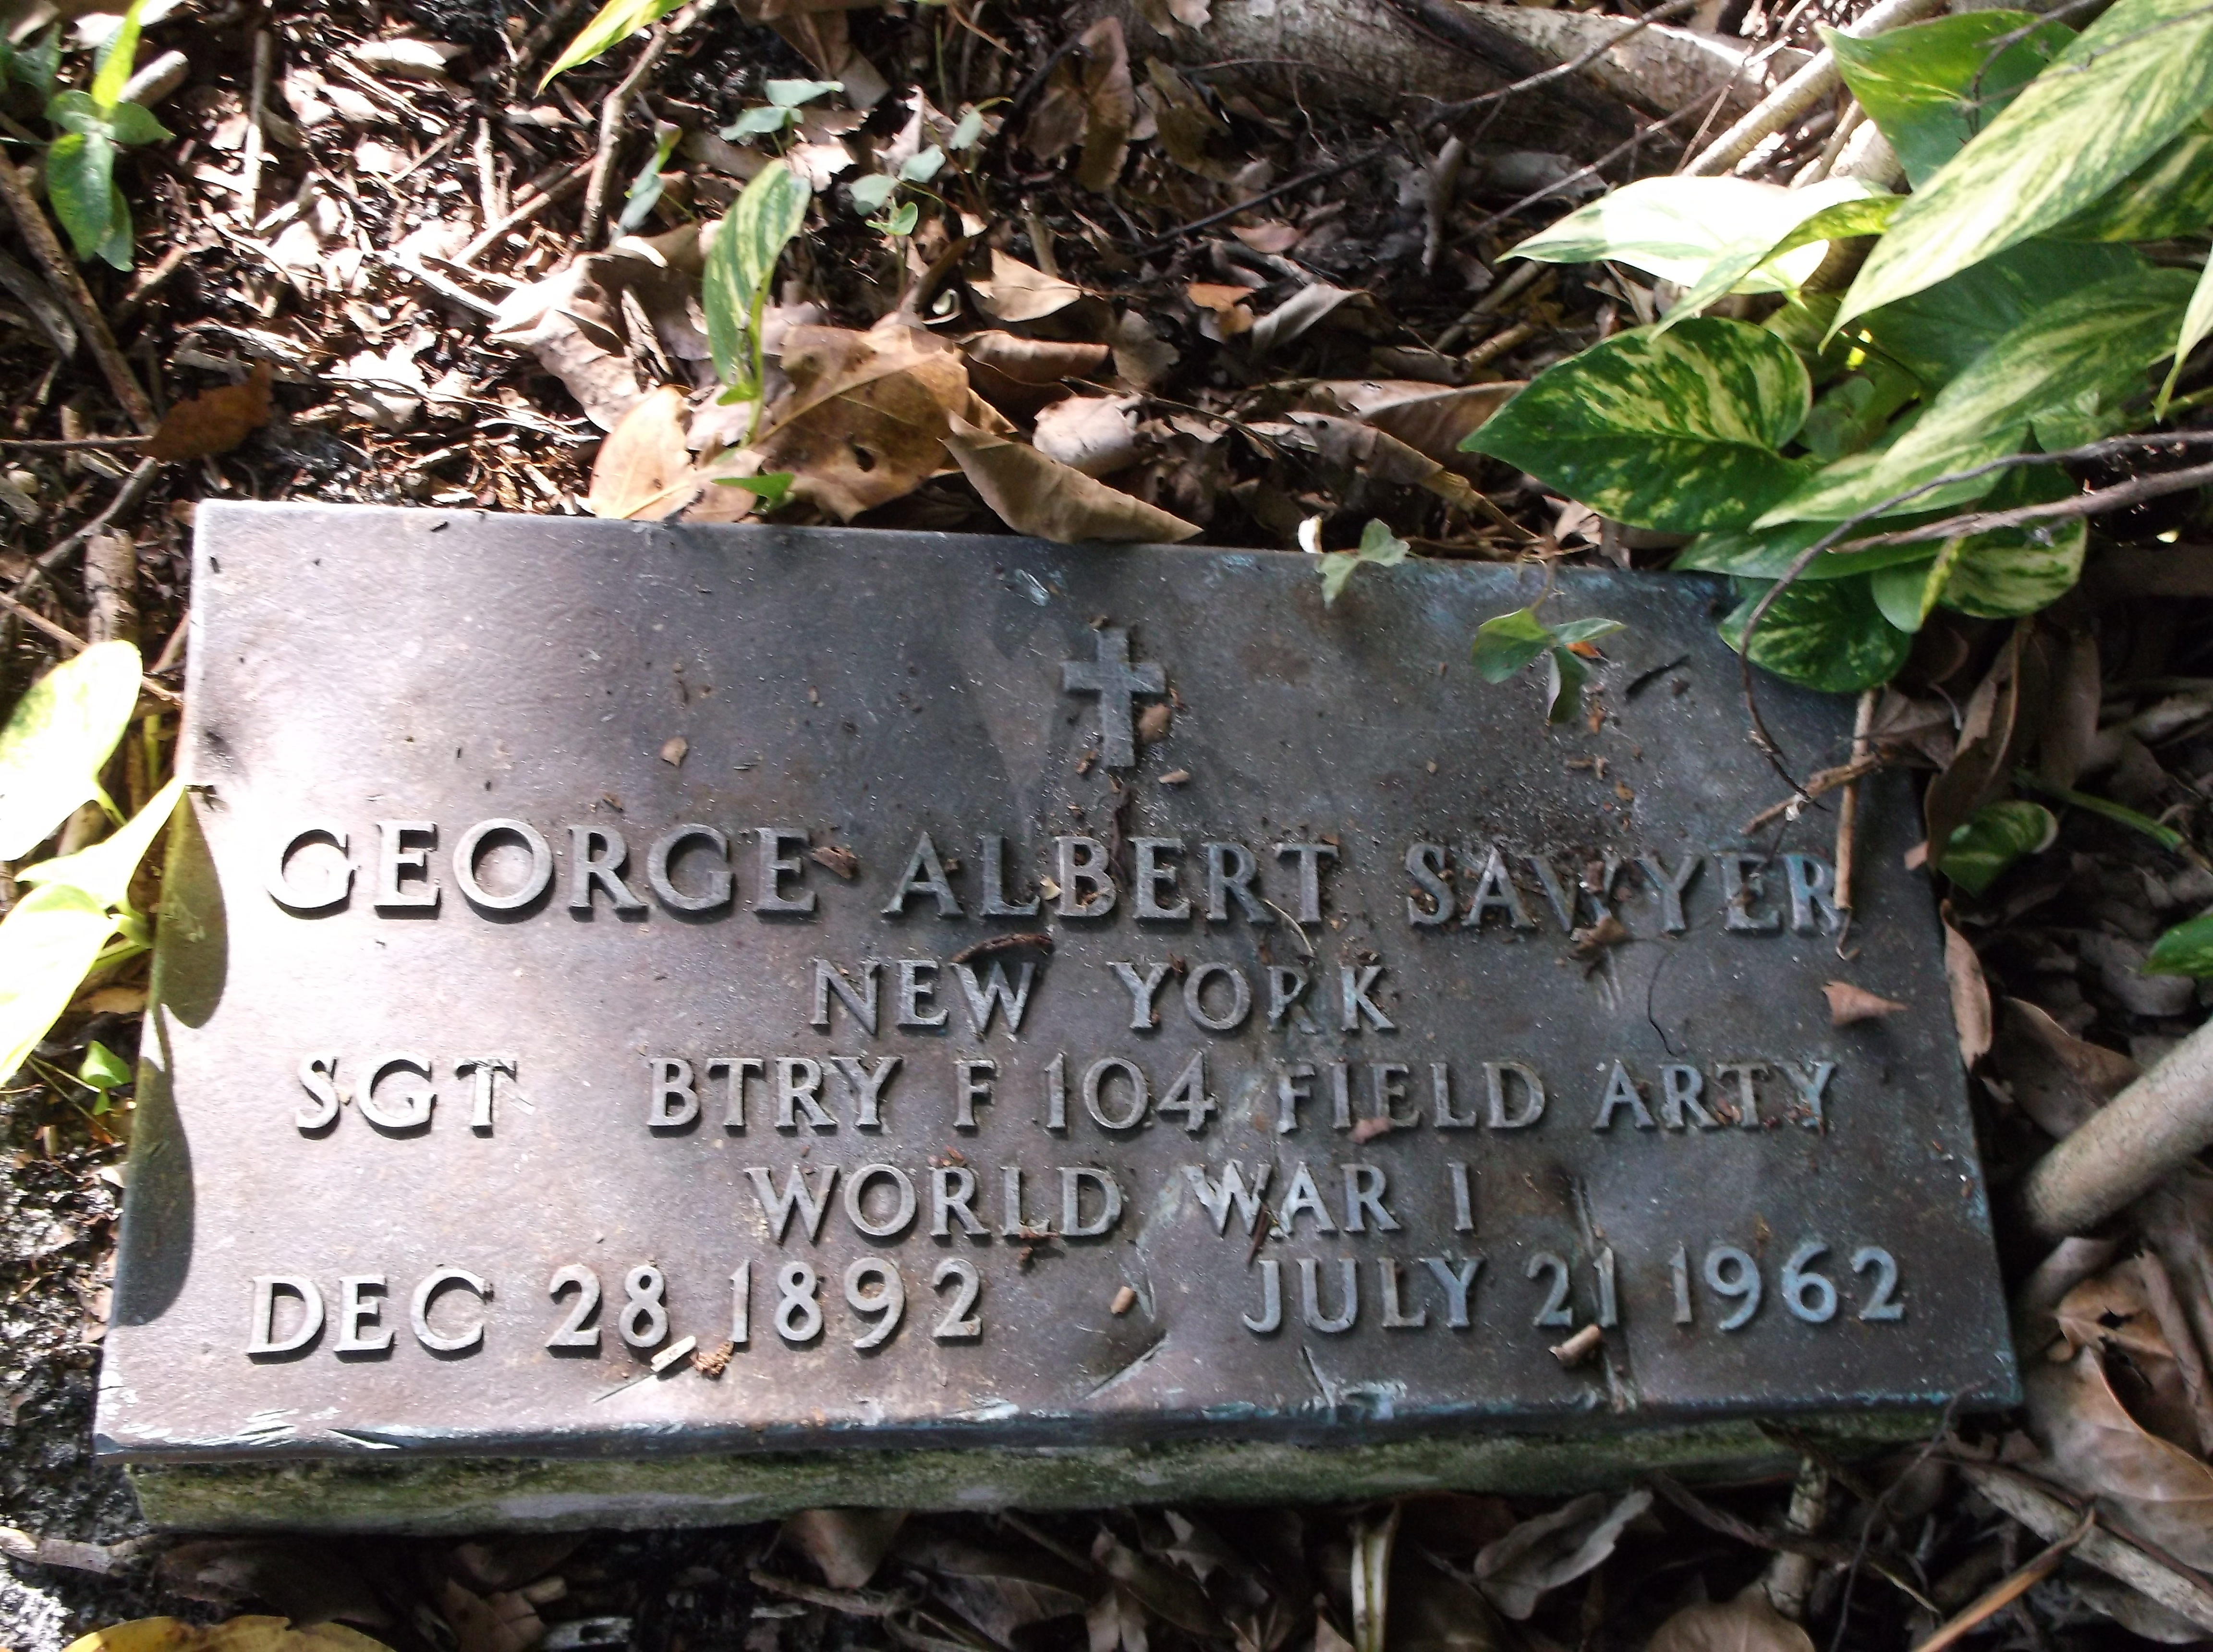 George Albert Sawyer